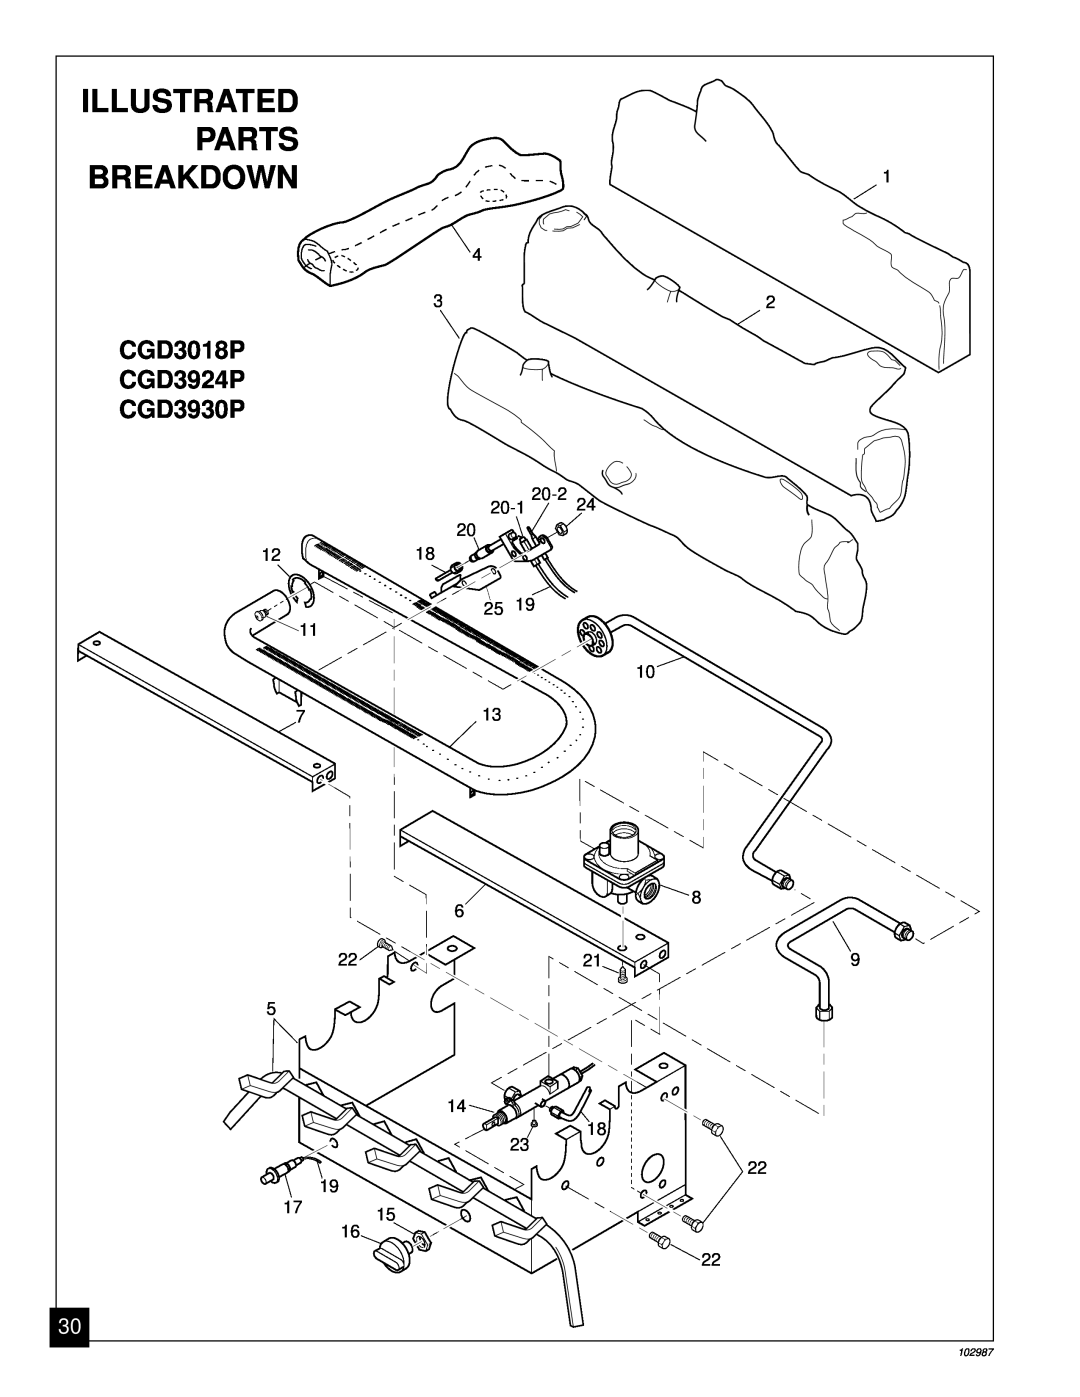 Desa CGD3018P installation manual Illustrated, Parts, Breakdown, CGD3924P, CGD3930P 